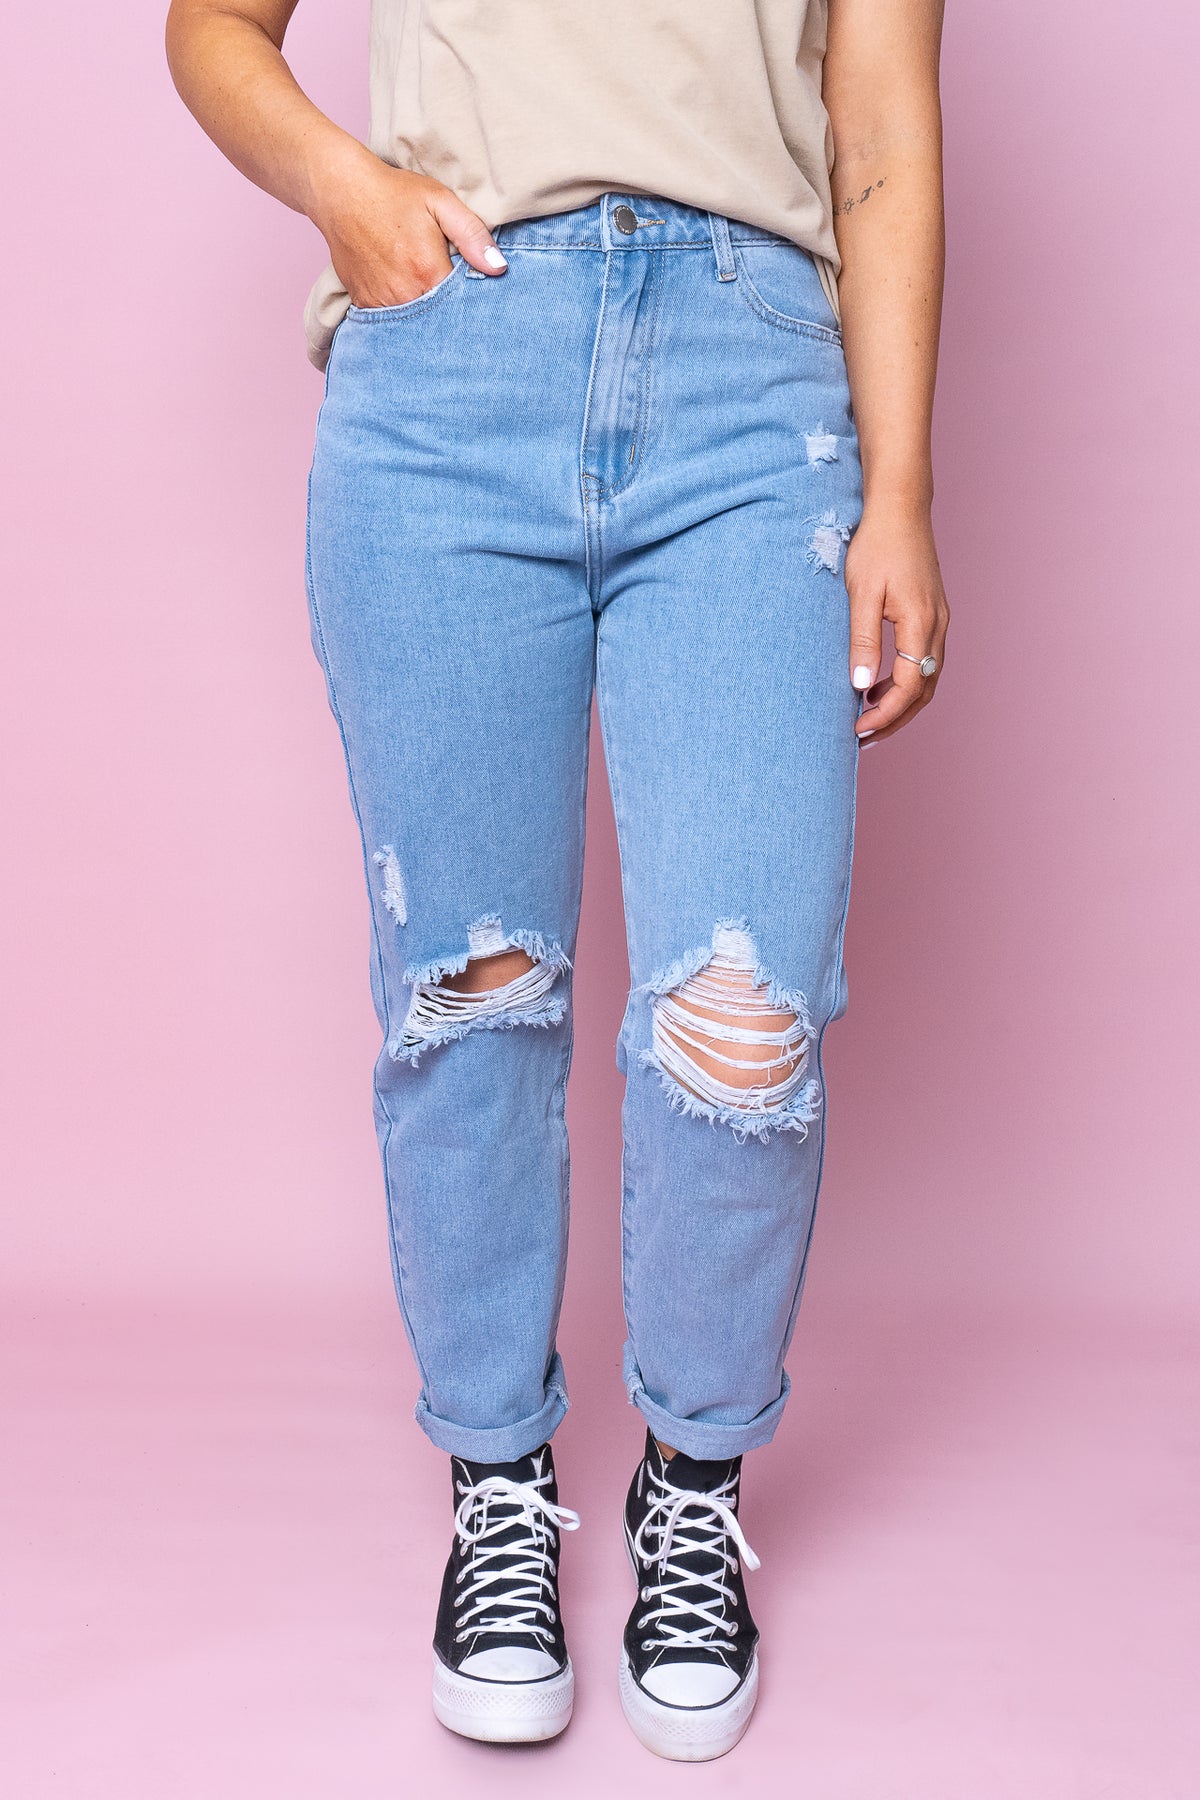 Cleo Denim Jeans in Light Blue